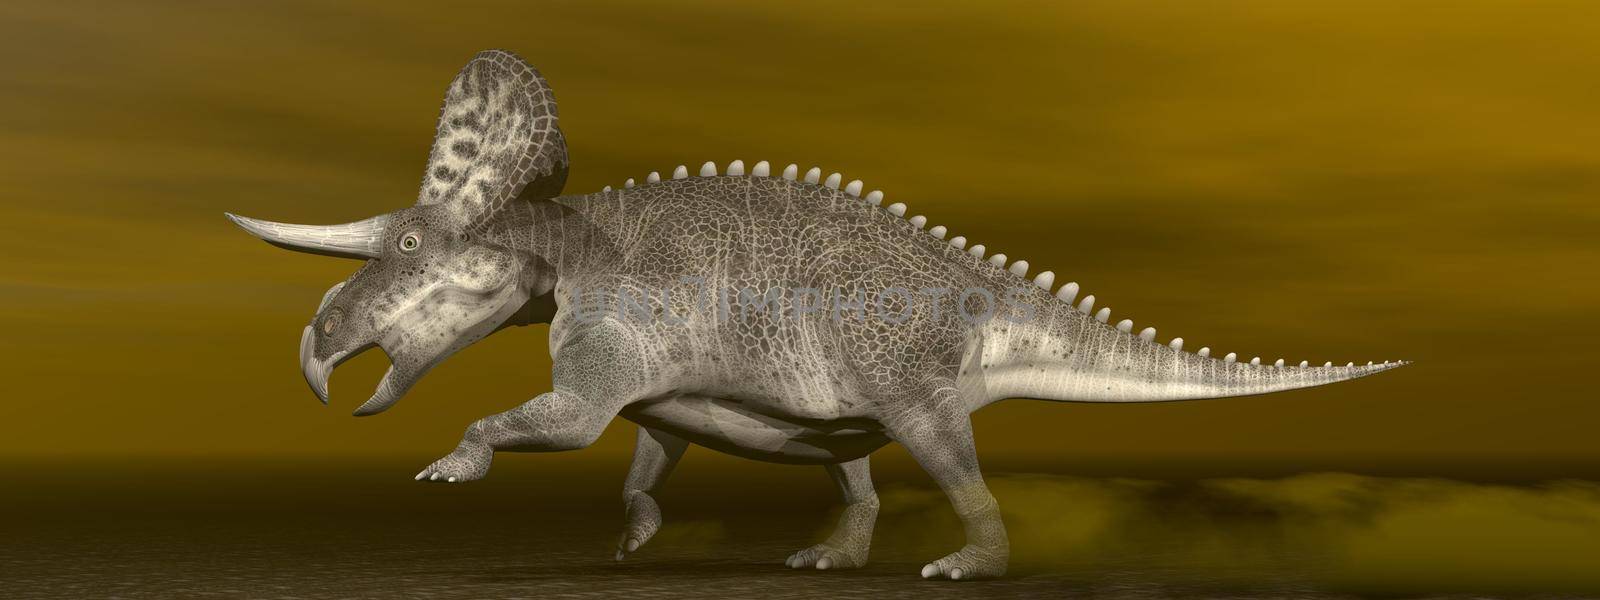 Zuniceratops dinosaur walking on the ground in brown background